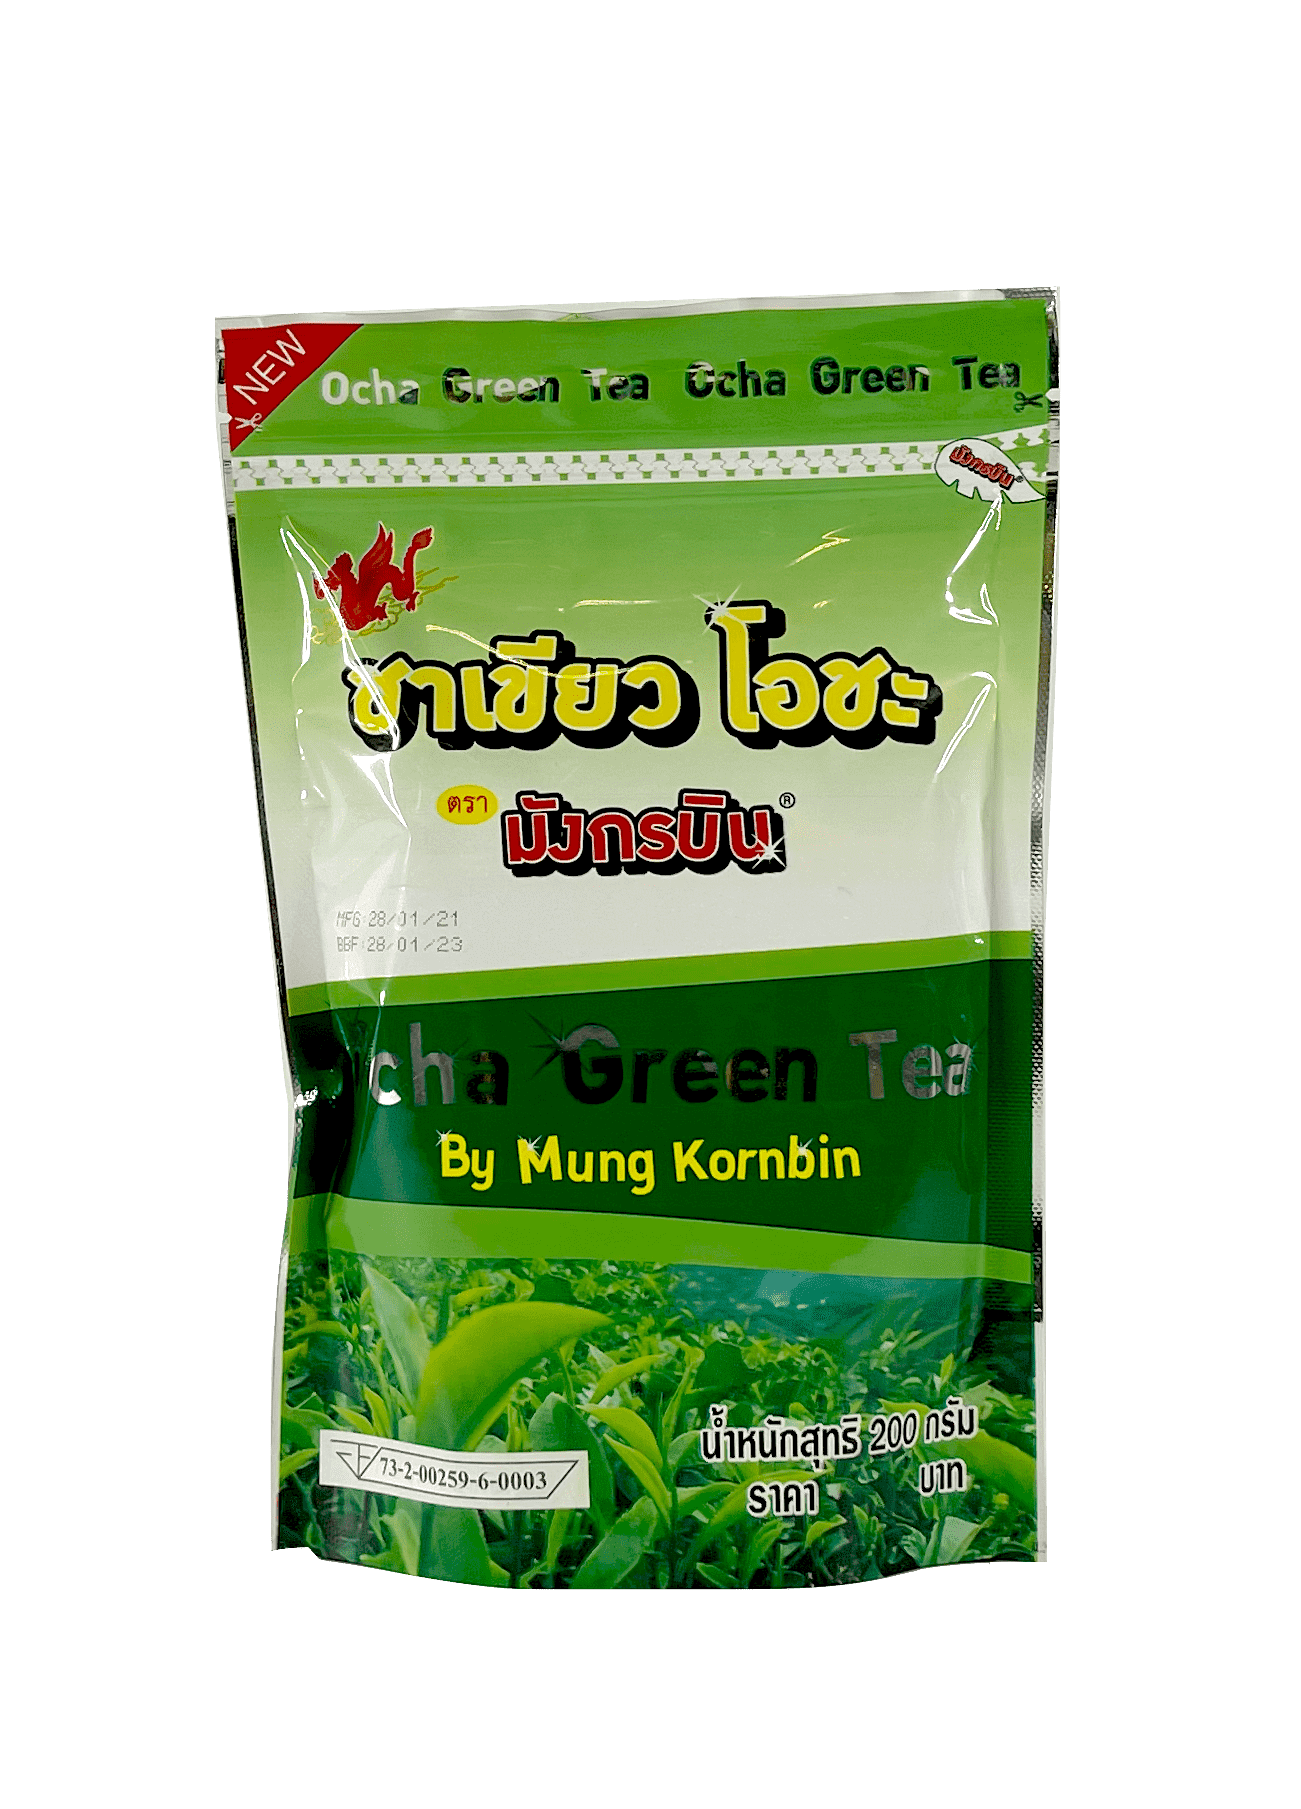 茉莉绿茶 200g Mungkornbin 泰国